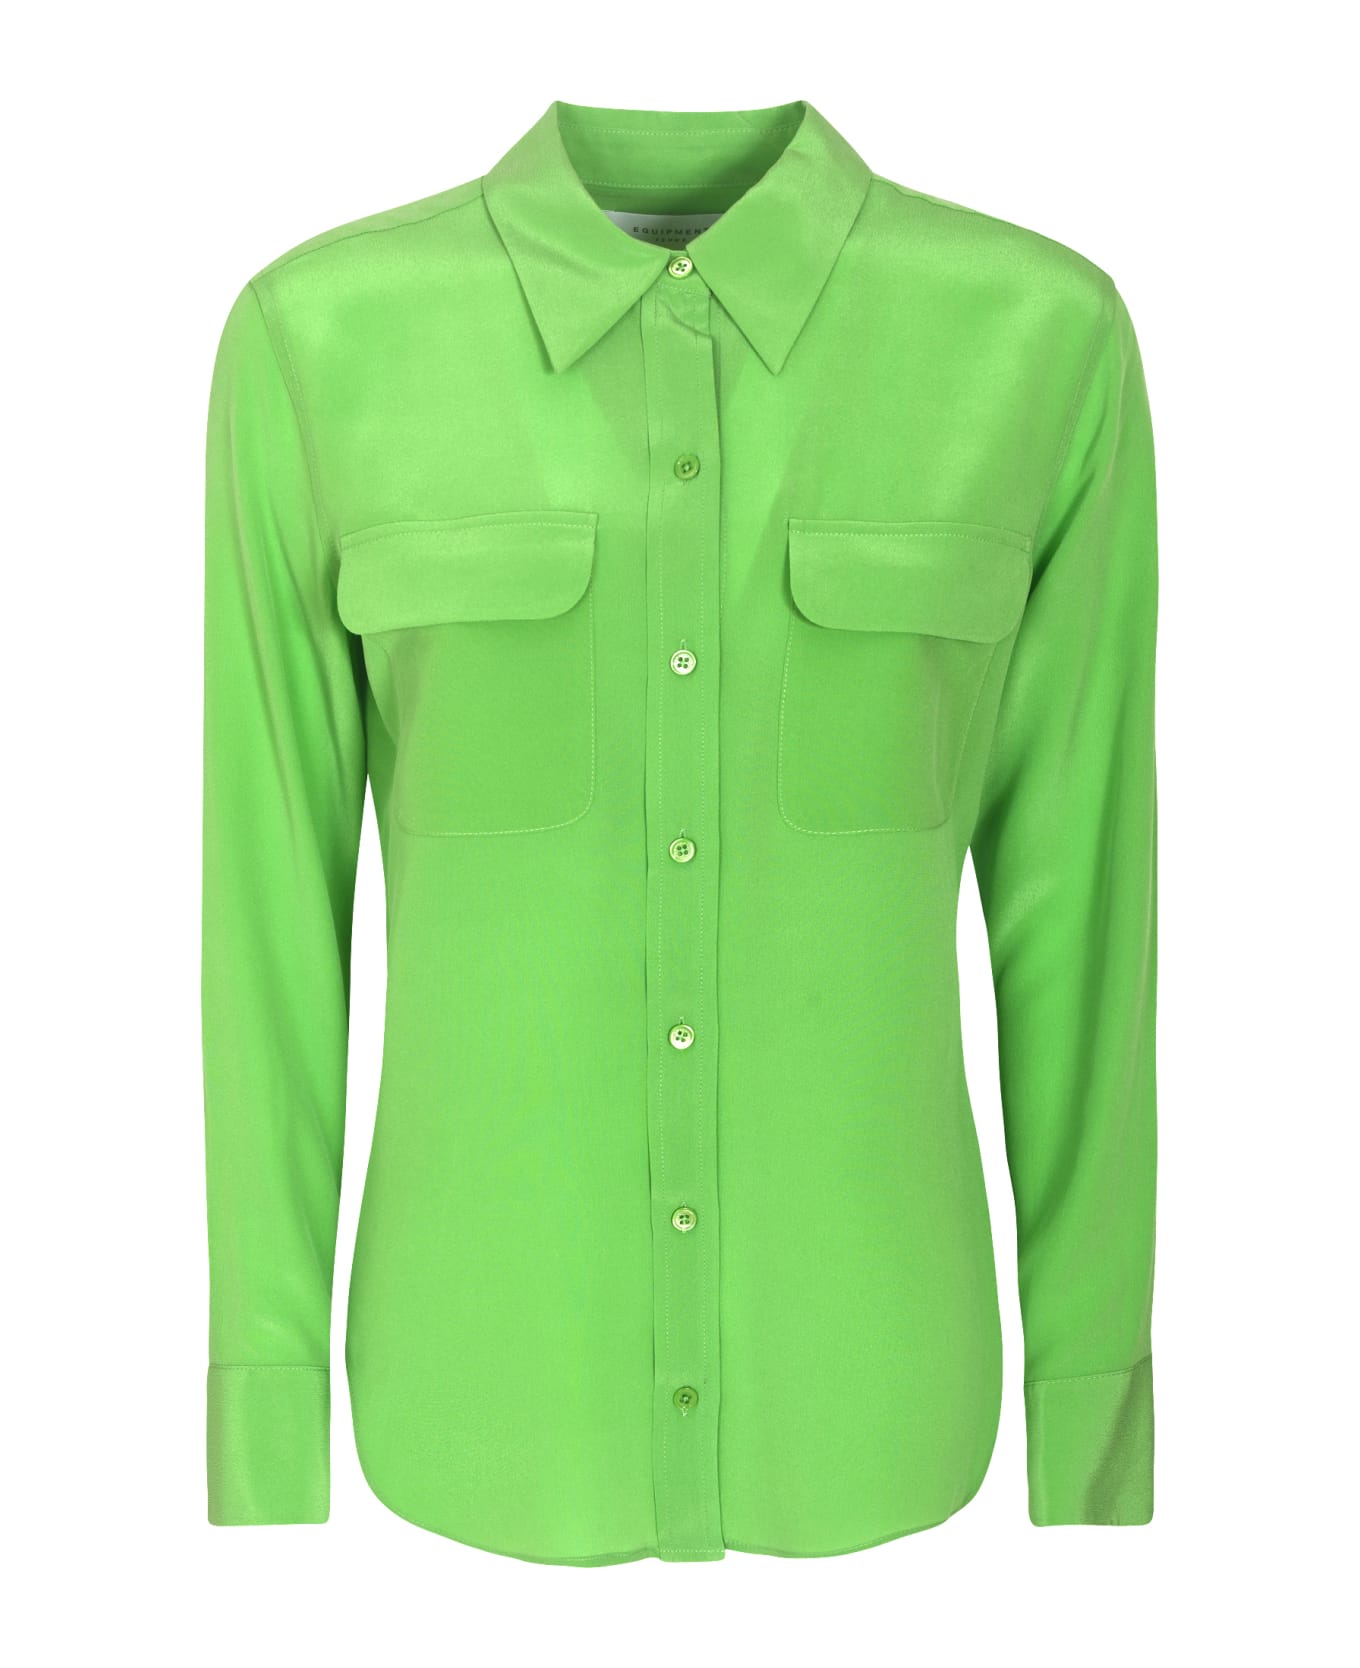 Equipment Round Hem Patched Pocket Plain Shirt - Vibrant Green シャツ